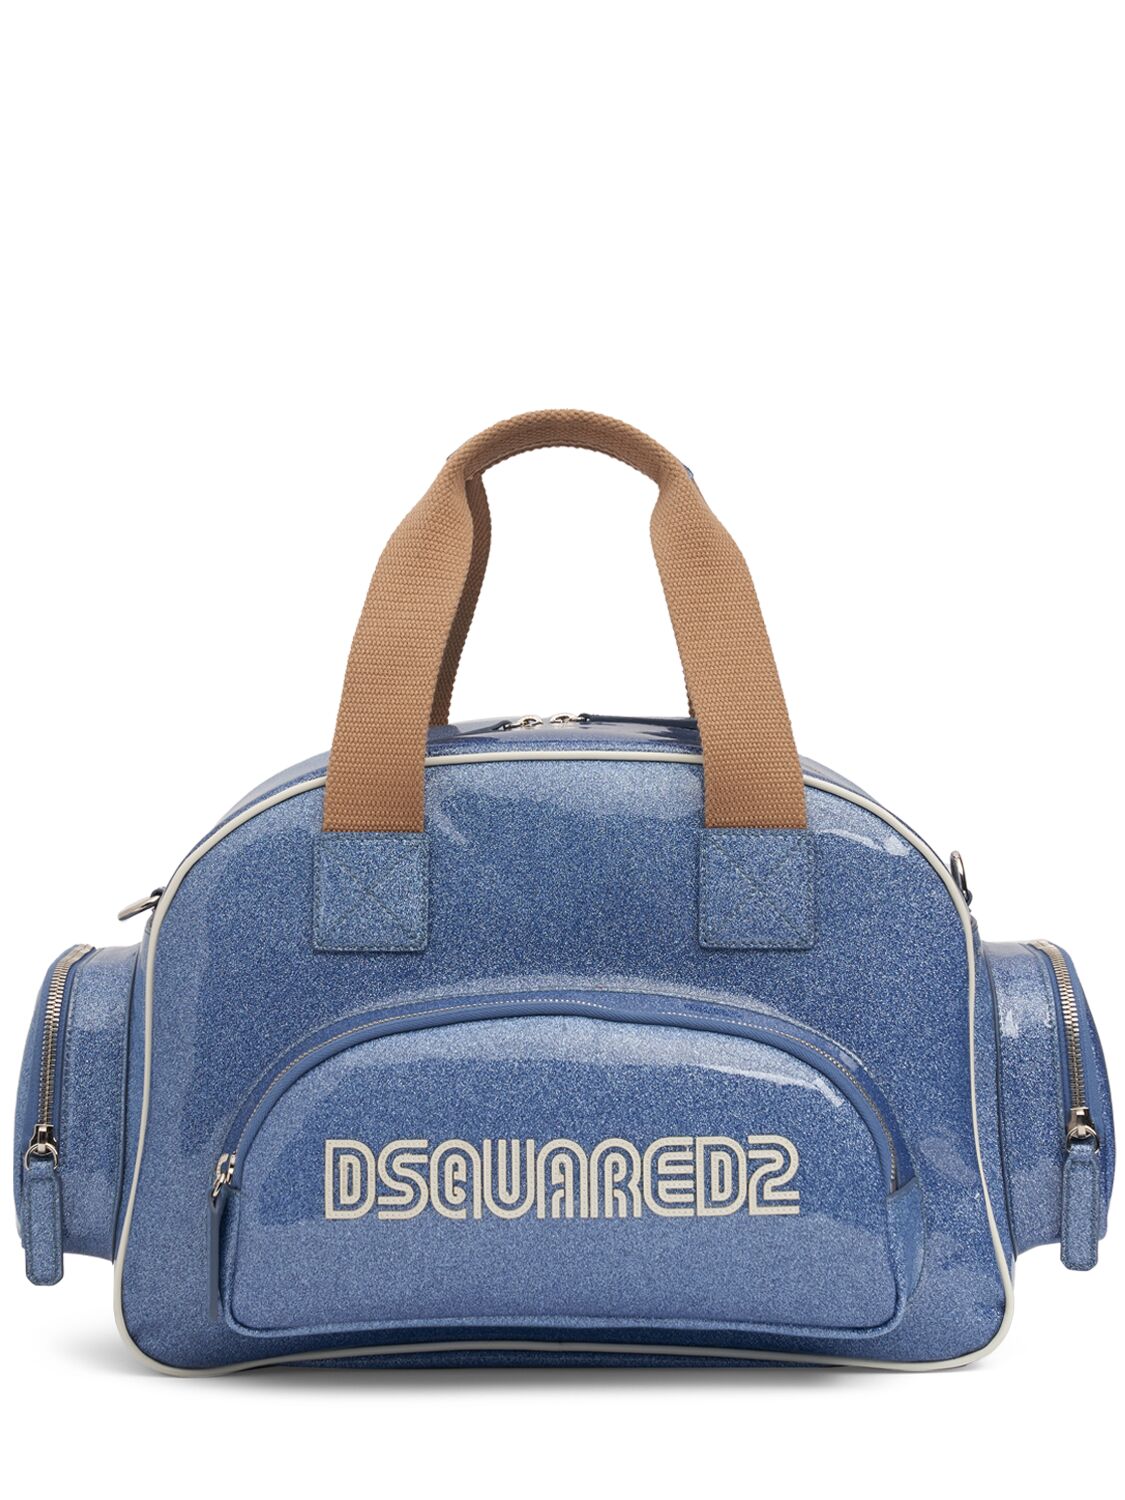 Image of Dsquared2 Logo Duffle Bag